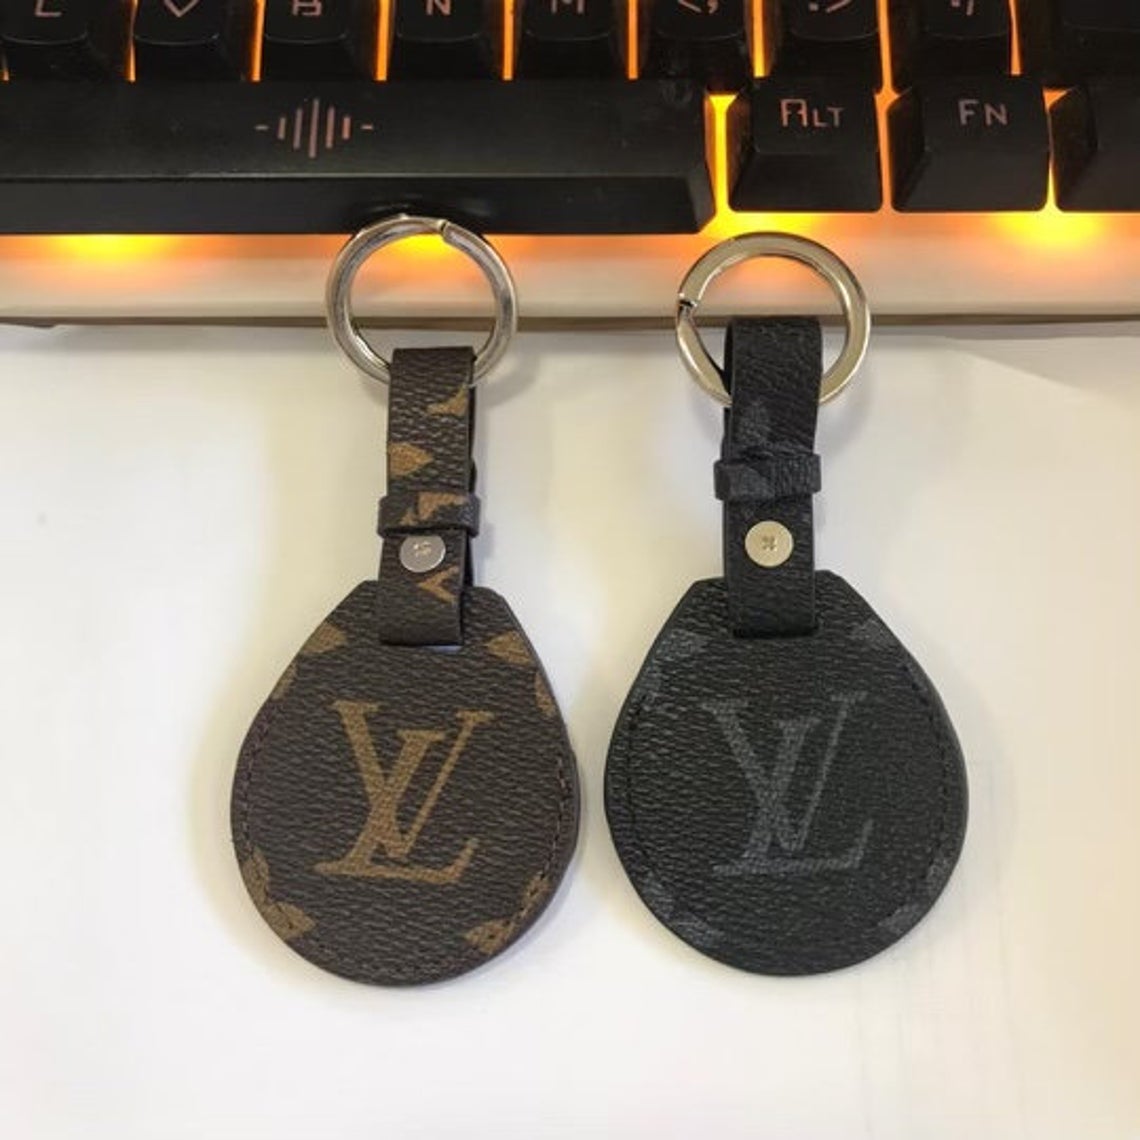 Louis Vuitton Black & Multi Coated Canvas Snap Closure Monogram Keychain